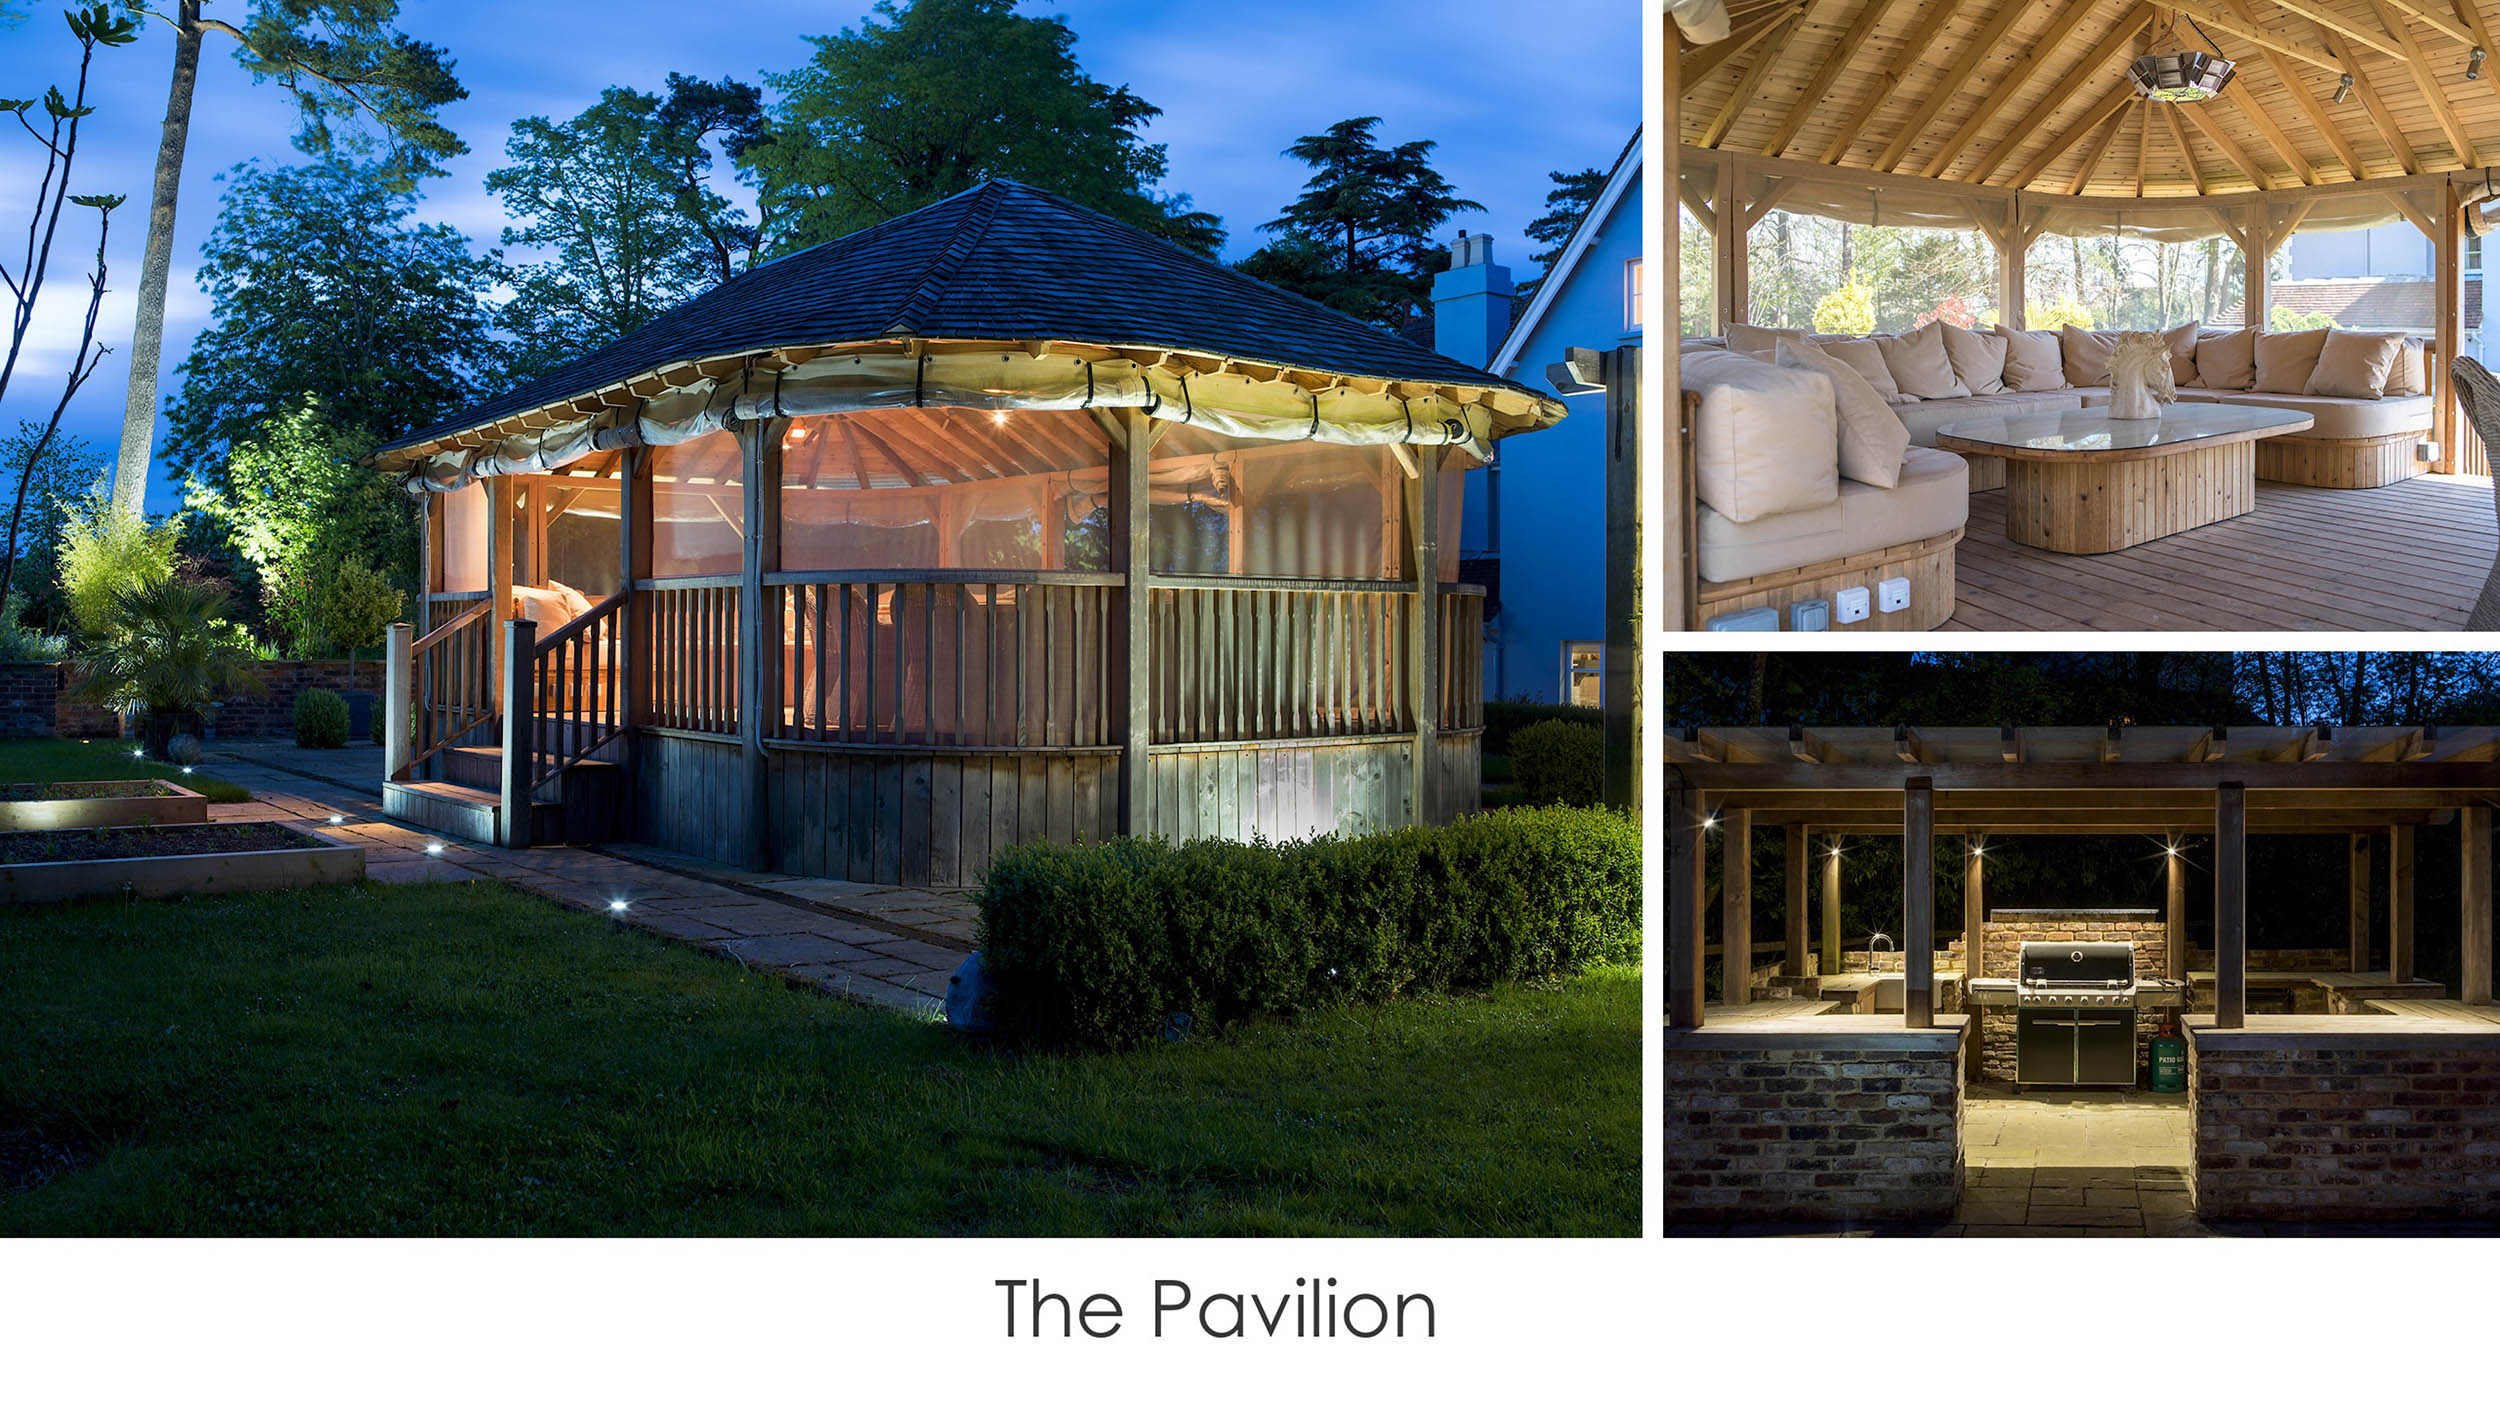 The Pavilion - Pennybridge House - Real Estate Development Projects by Gabriella Atkinson.